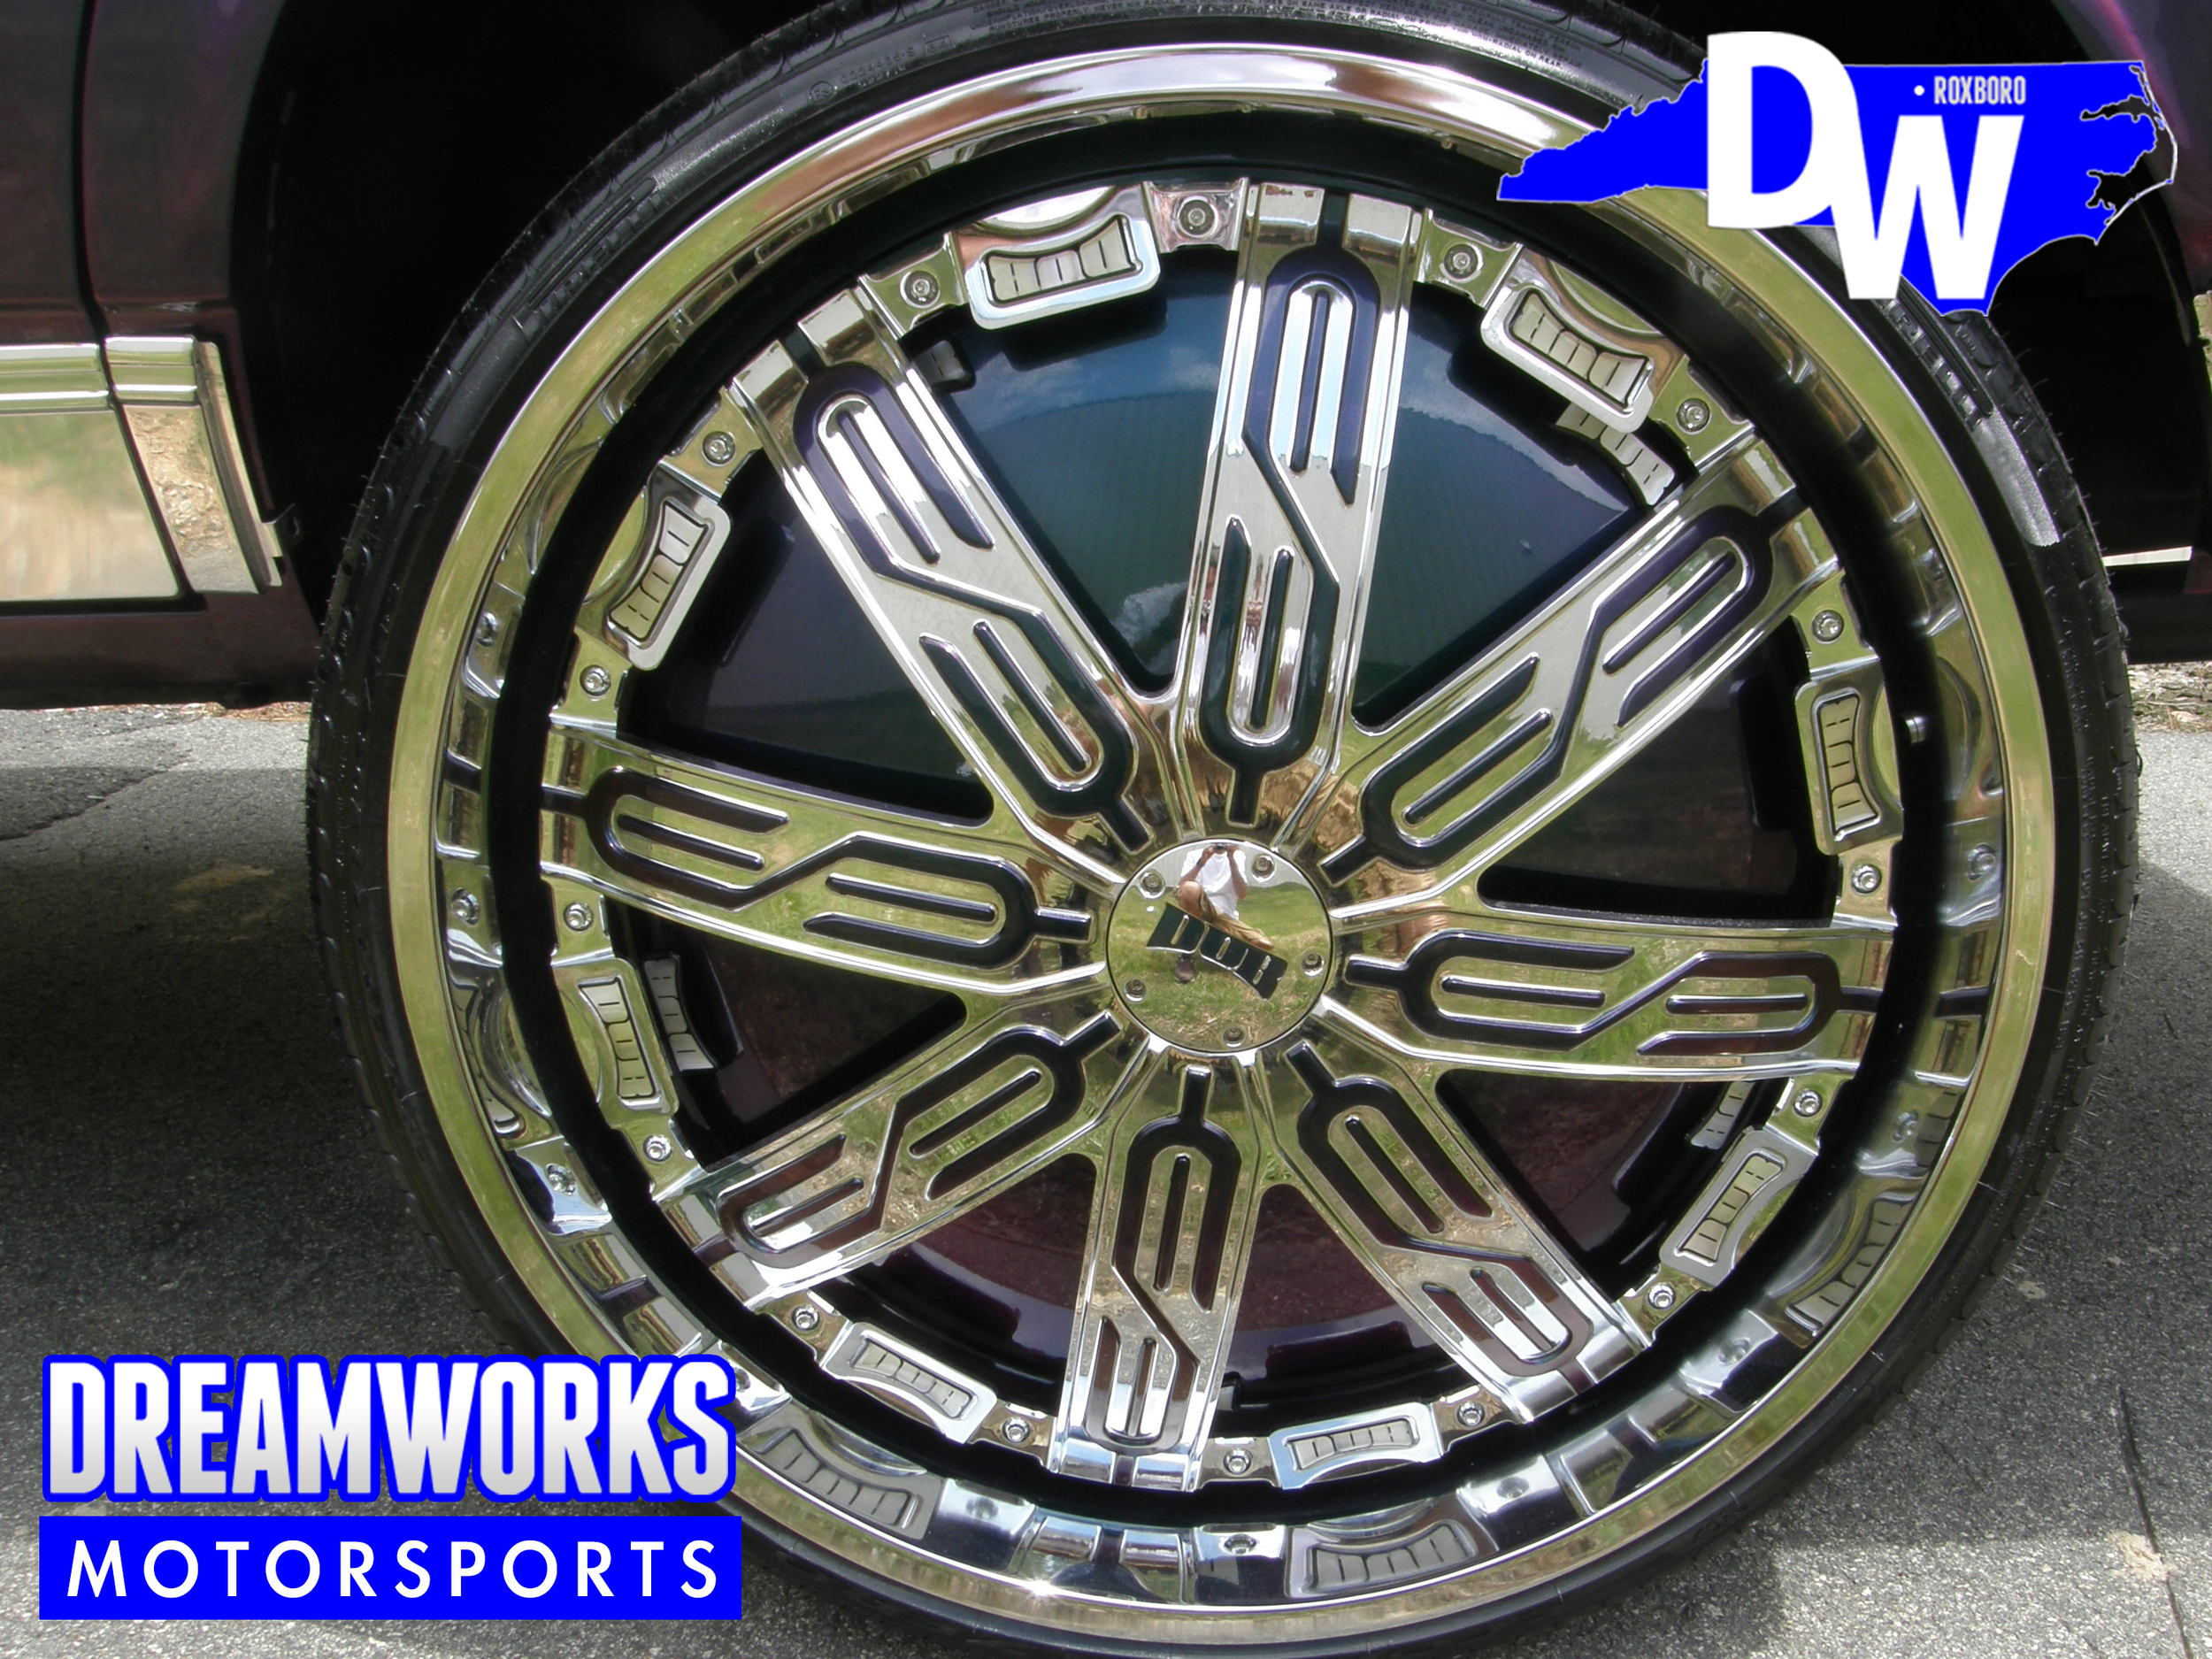 86-Chevrolet-Caprice-DUB-Tycoons-Dreamworks-Motorsports-5.jpg